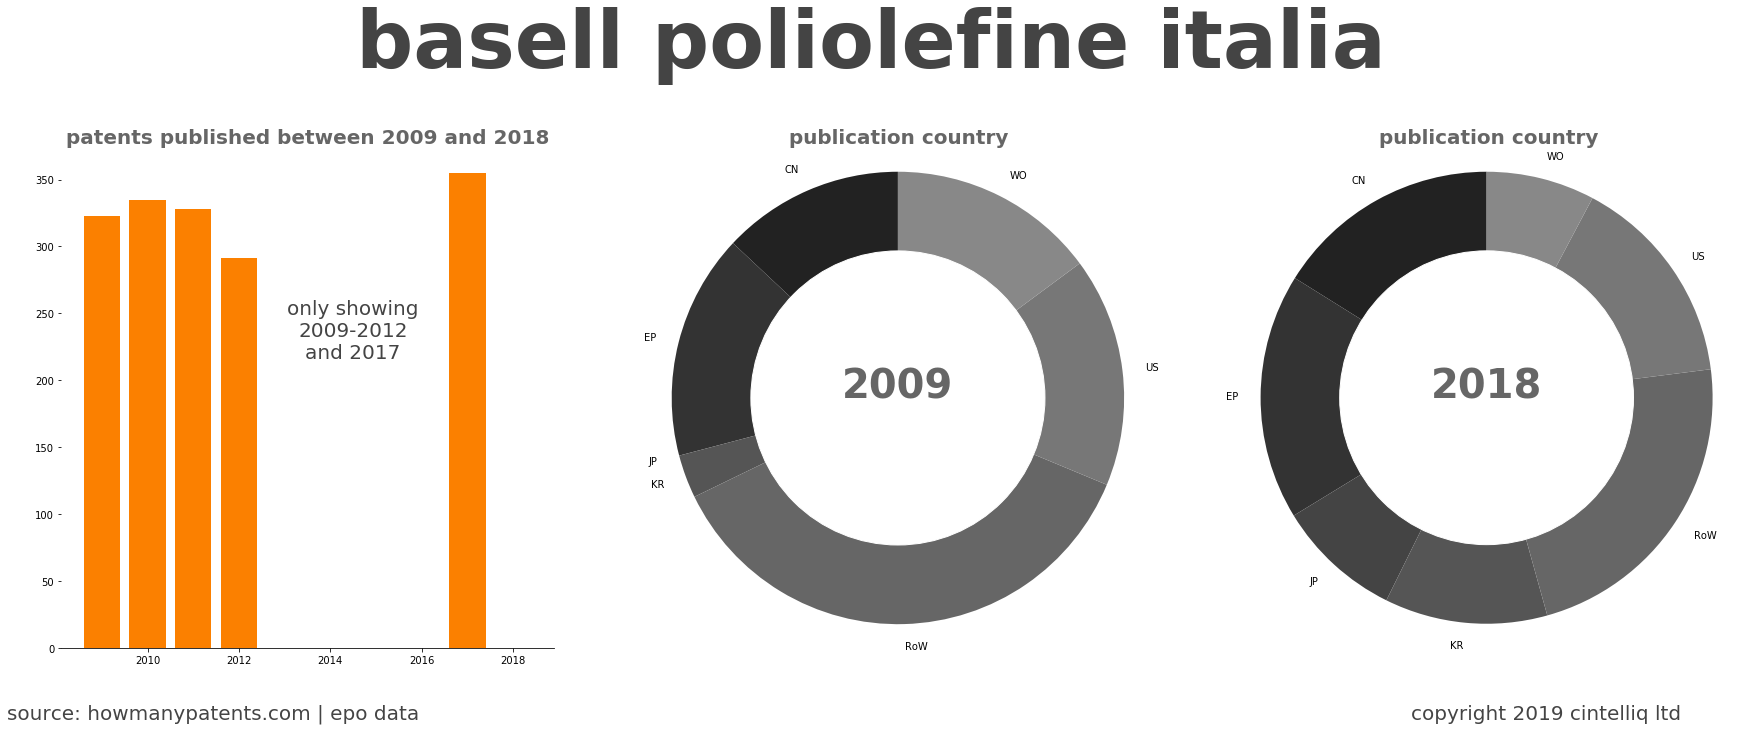 summary of patents for Basell Poliolefine Italia